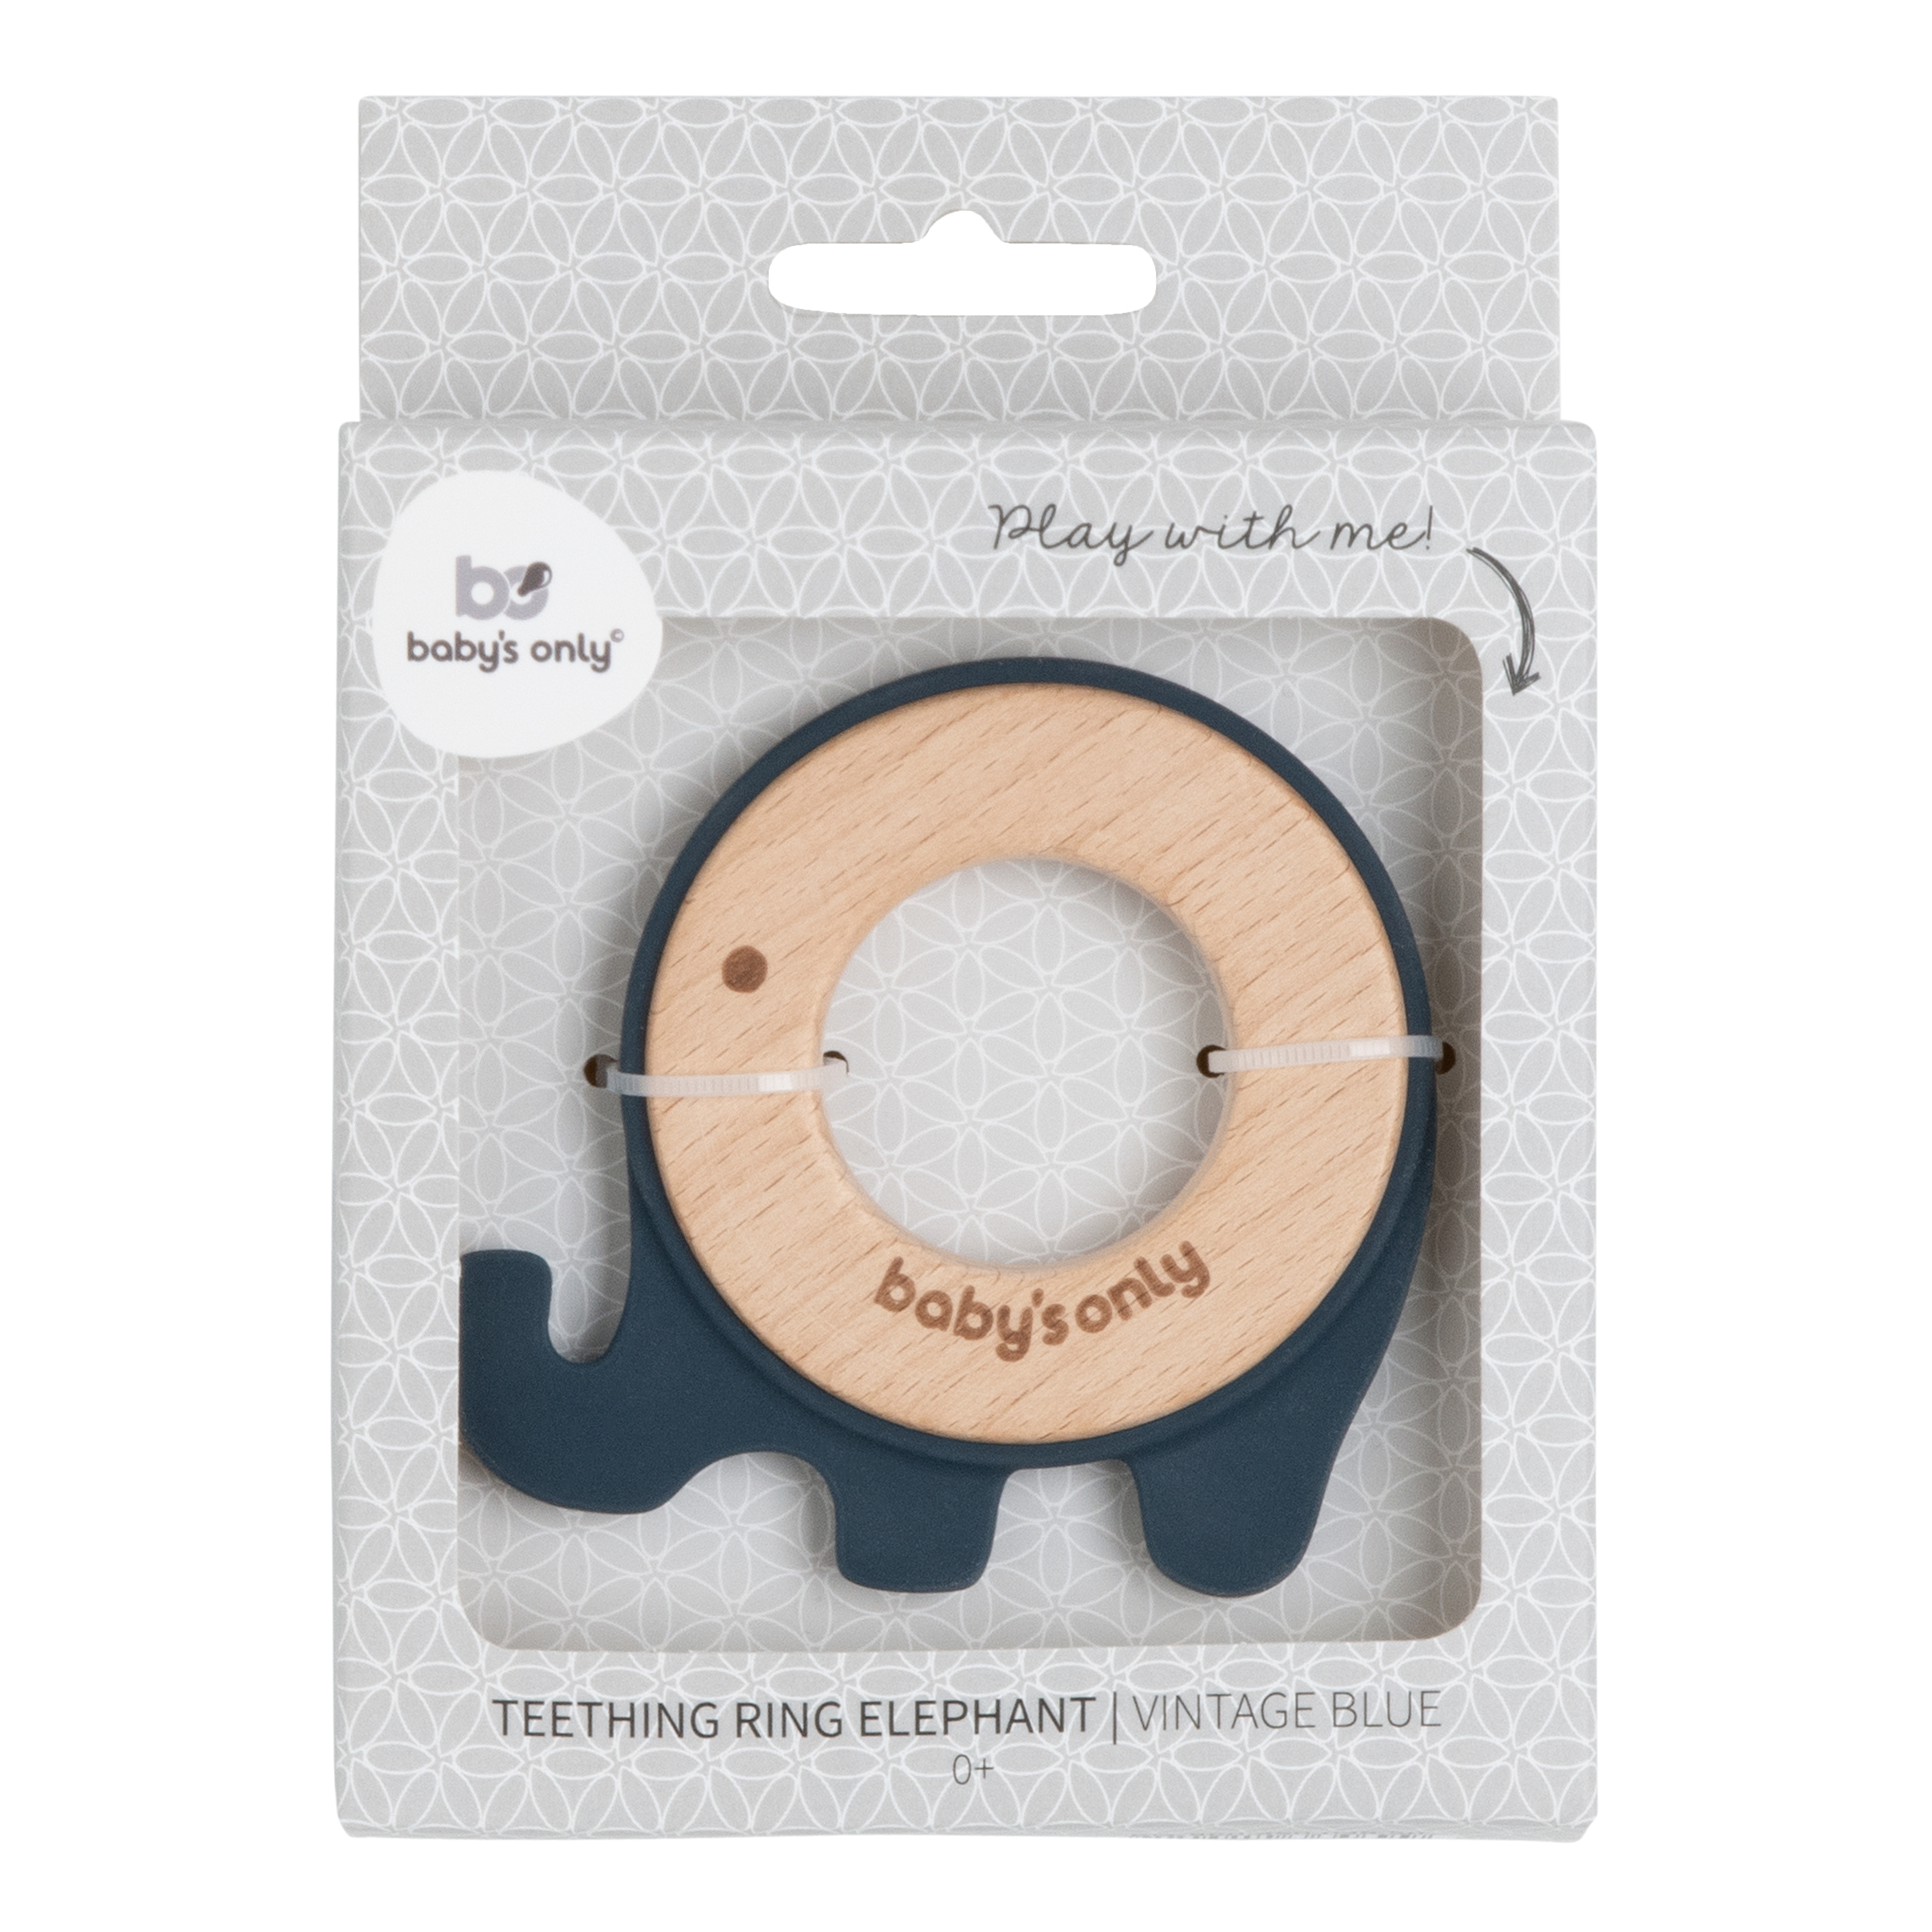 Teething ring elephant vintage blue